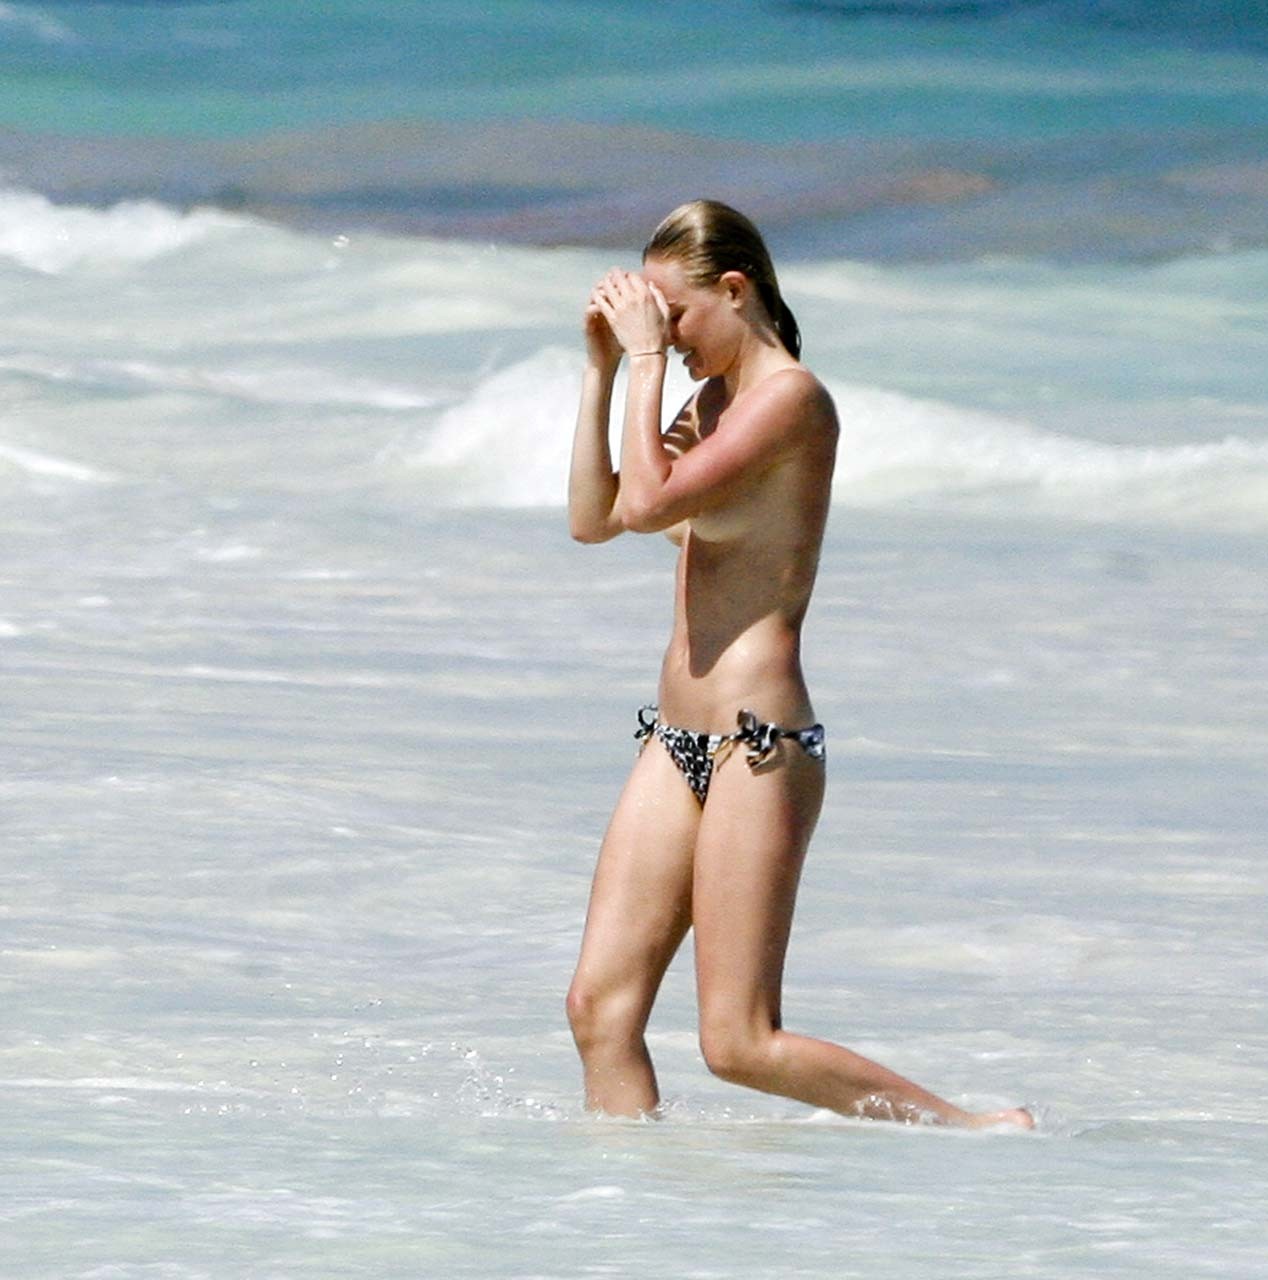 Kate Bosworth enjoying on beach in topless and exposing her sexy bikini body #75308744